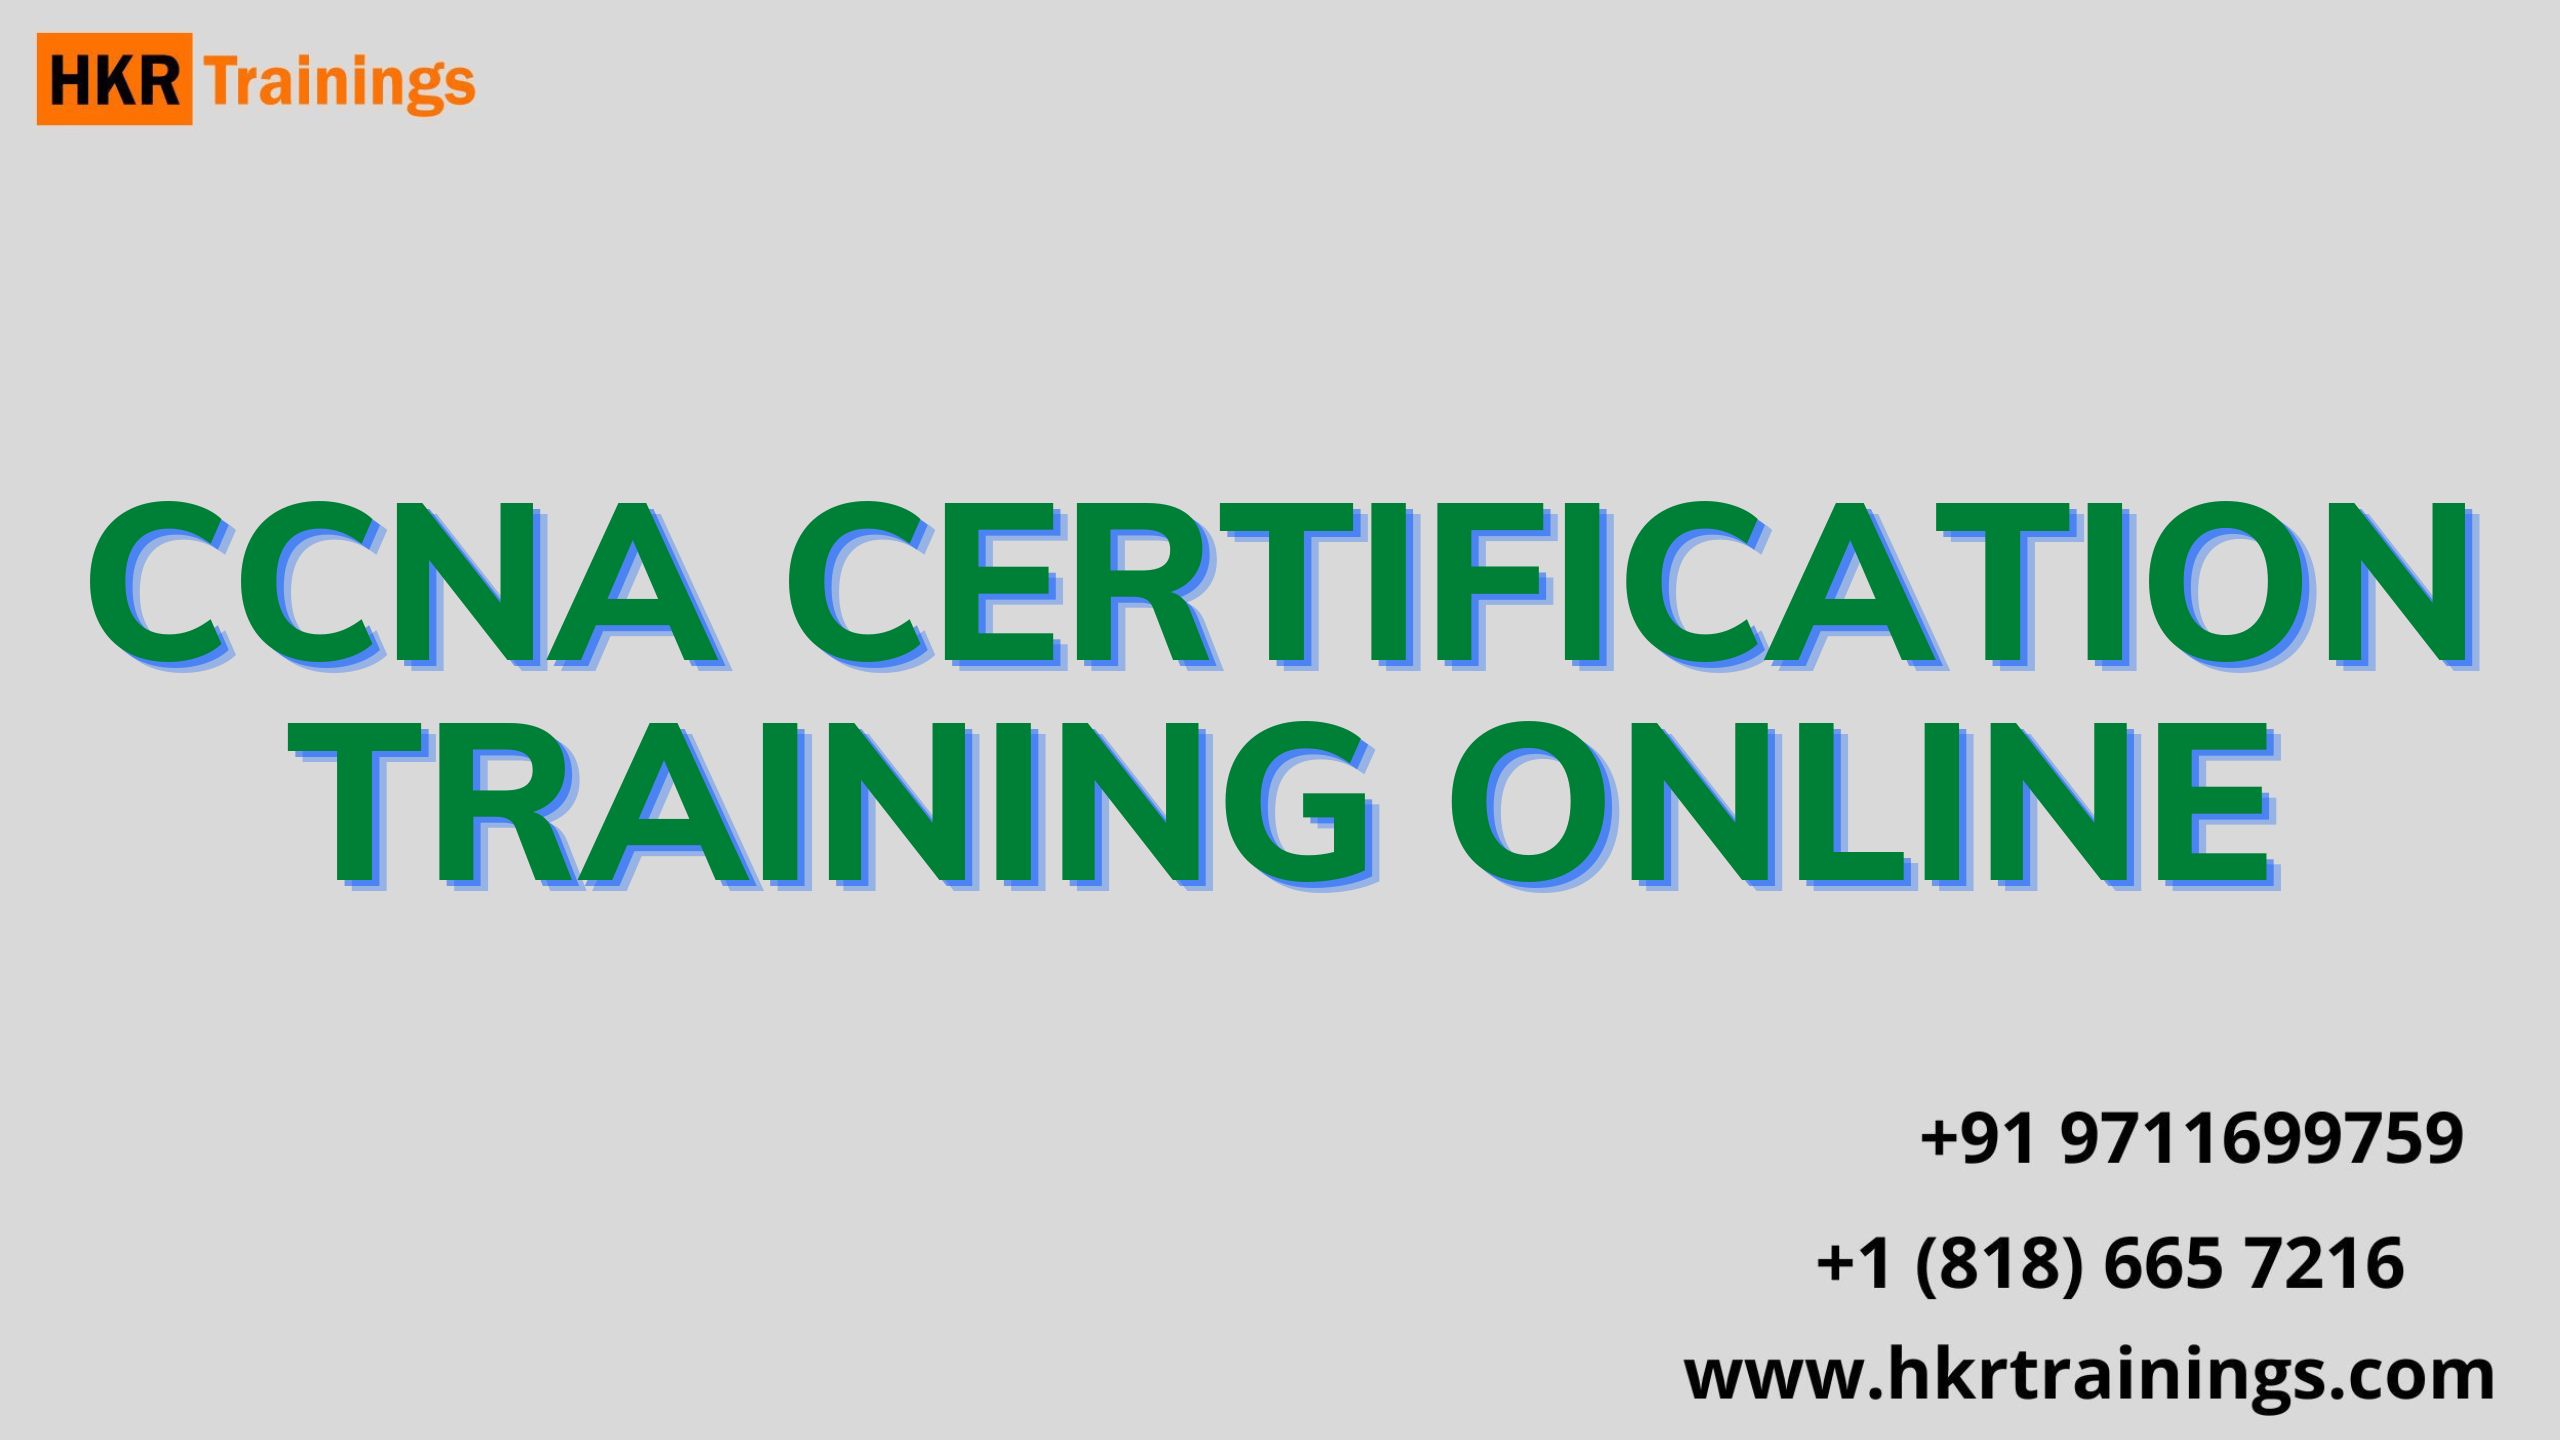 CCNA Certification Training Course Online, Online Event